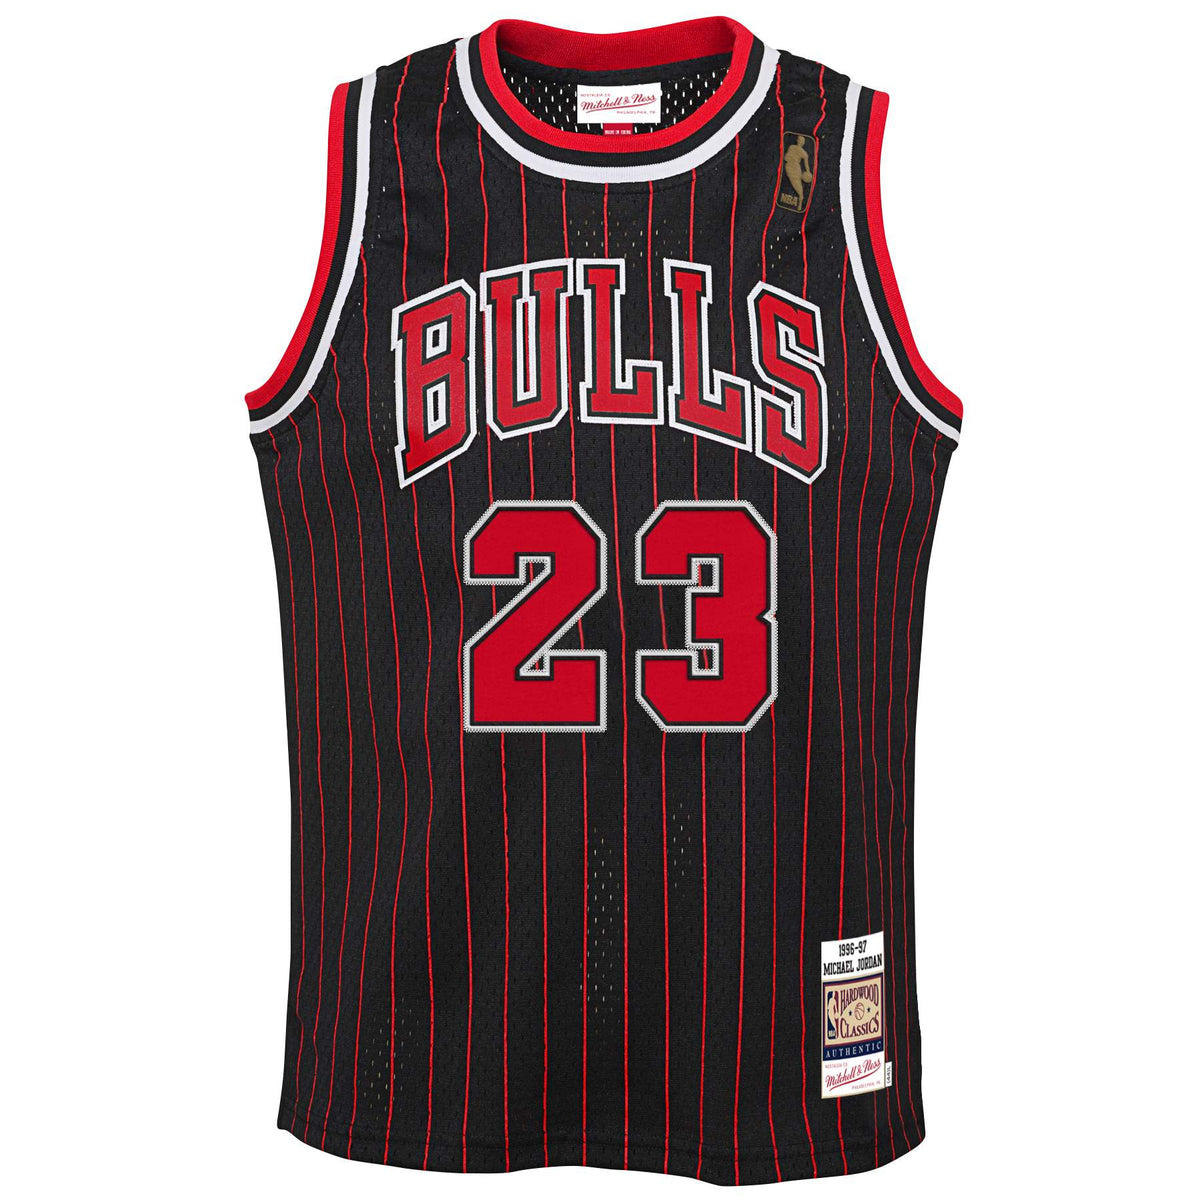 Authentic Jersey Jordan 2 Chicago Bulls